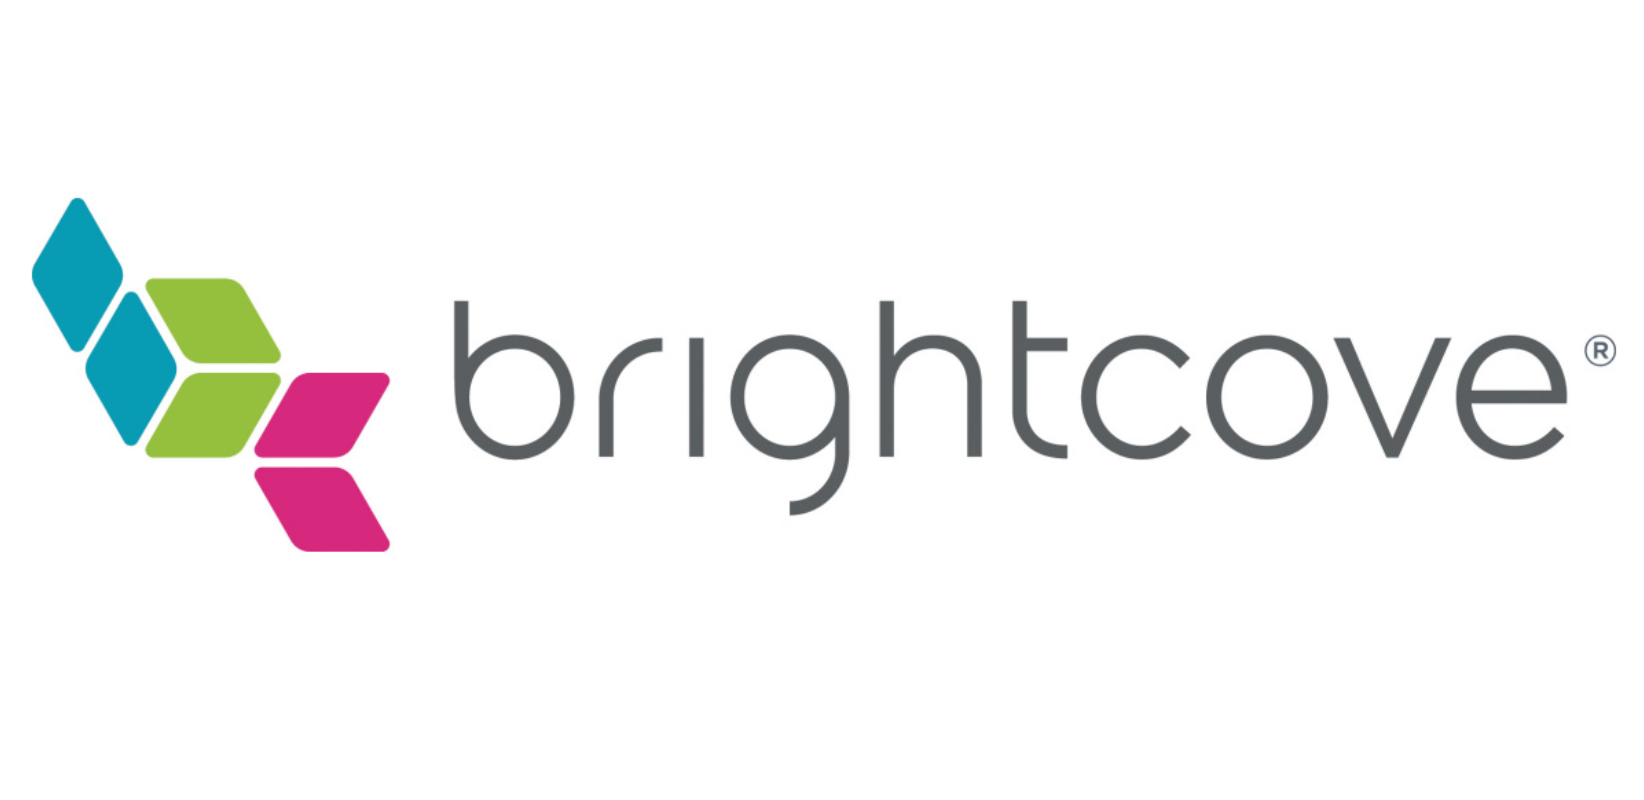 Brightcove logo